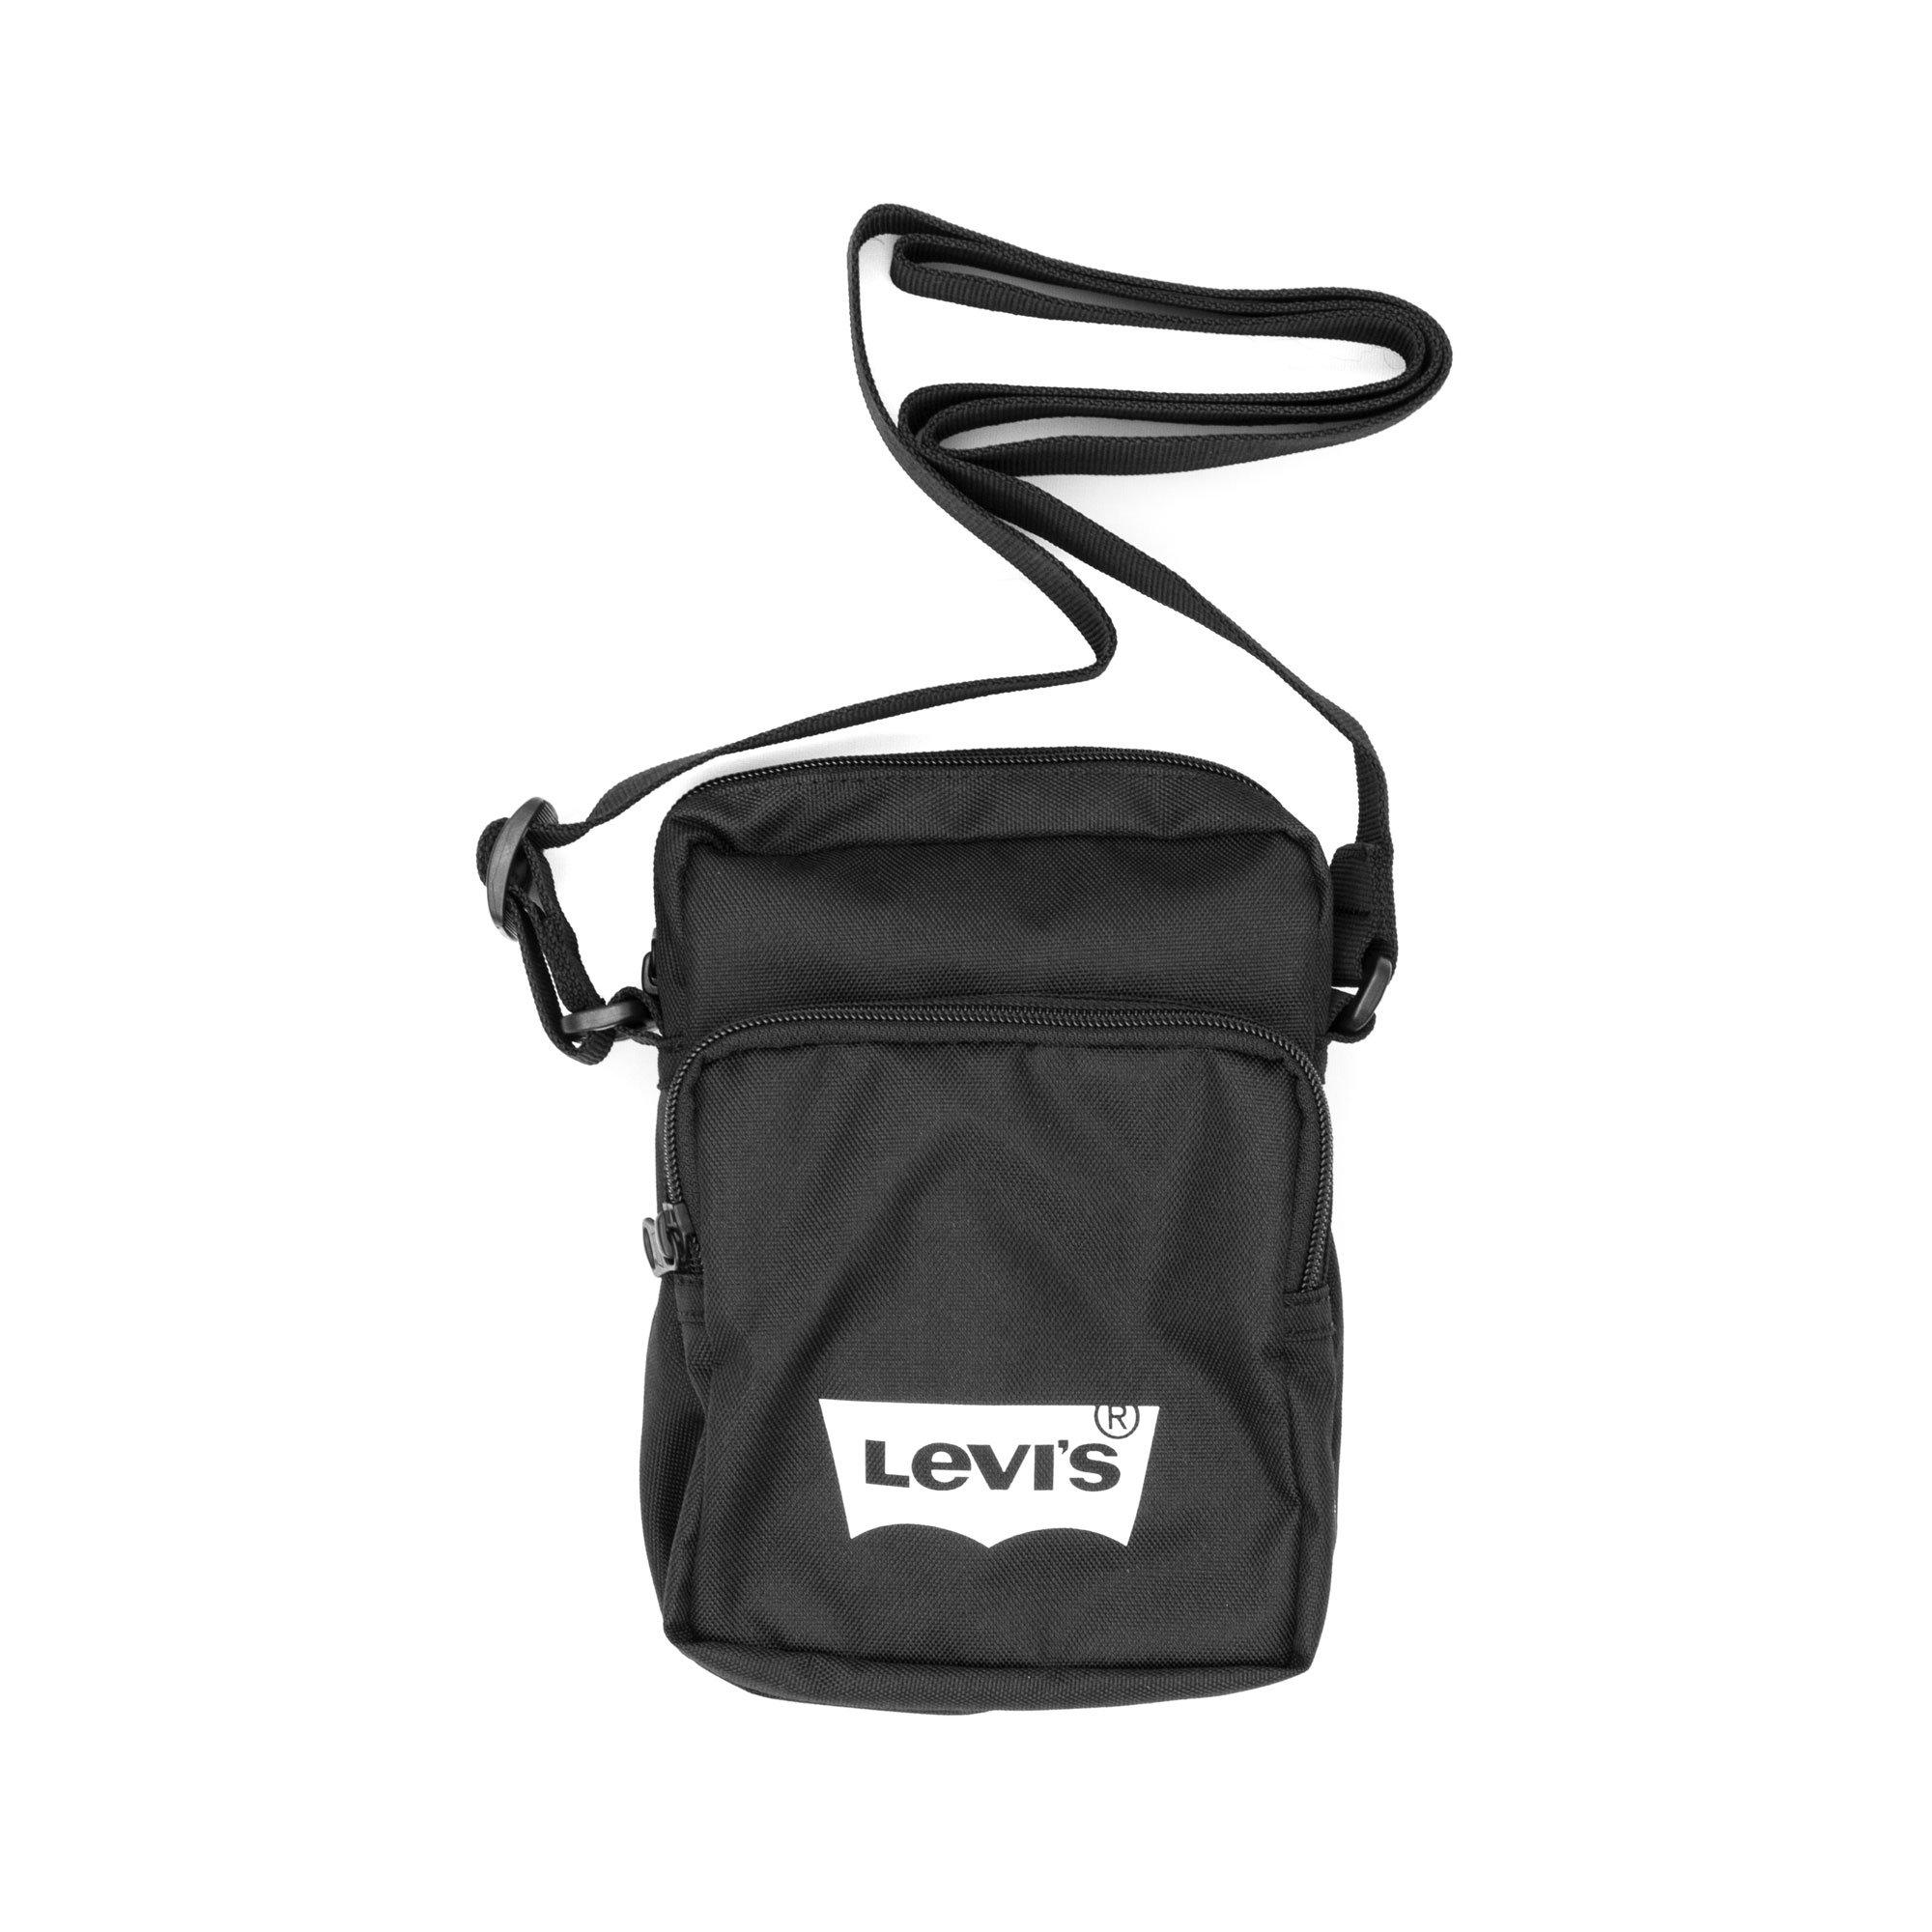 levis cross body bag